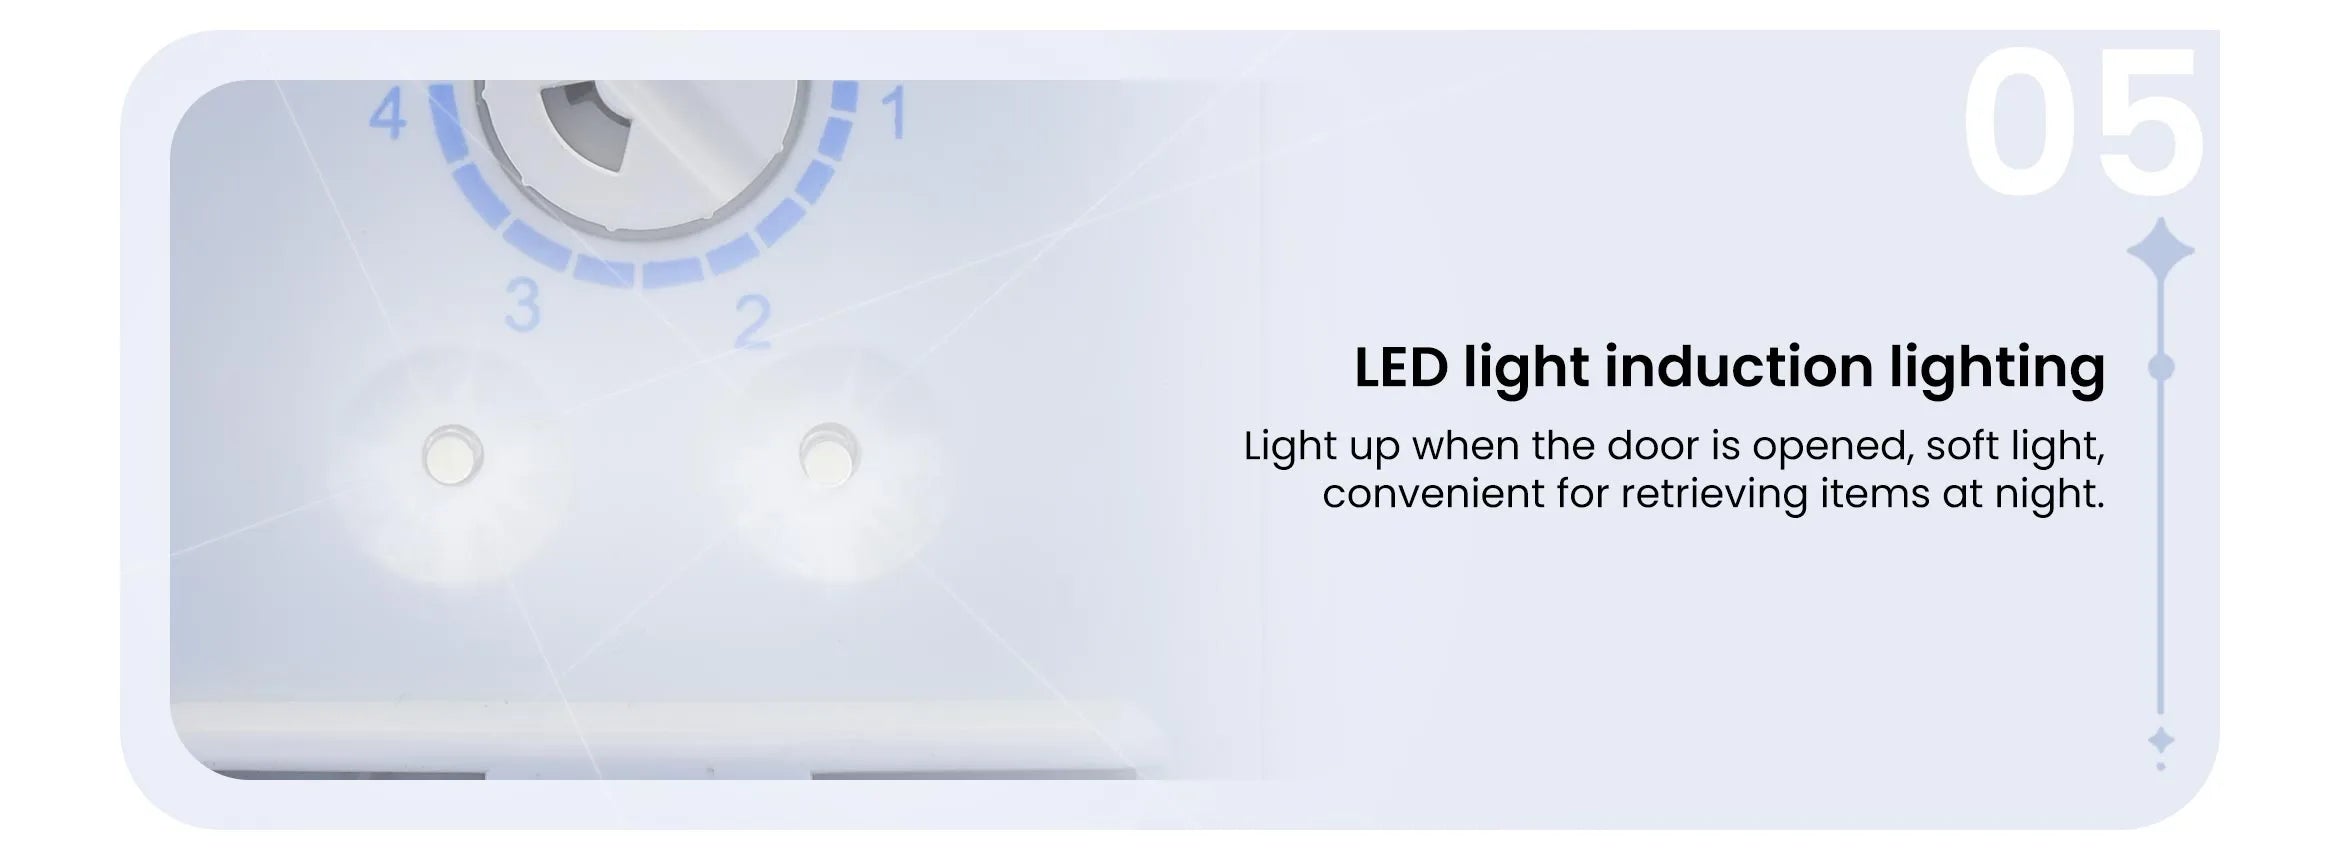 DSG-40L LED light induction lighting